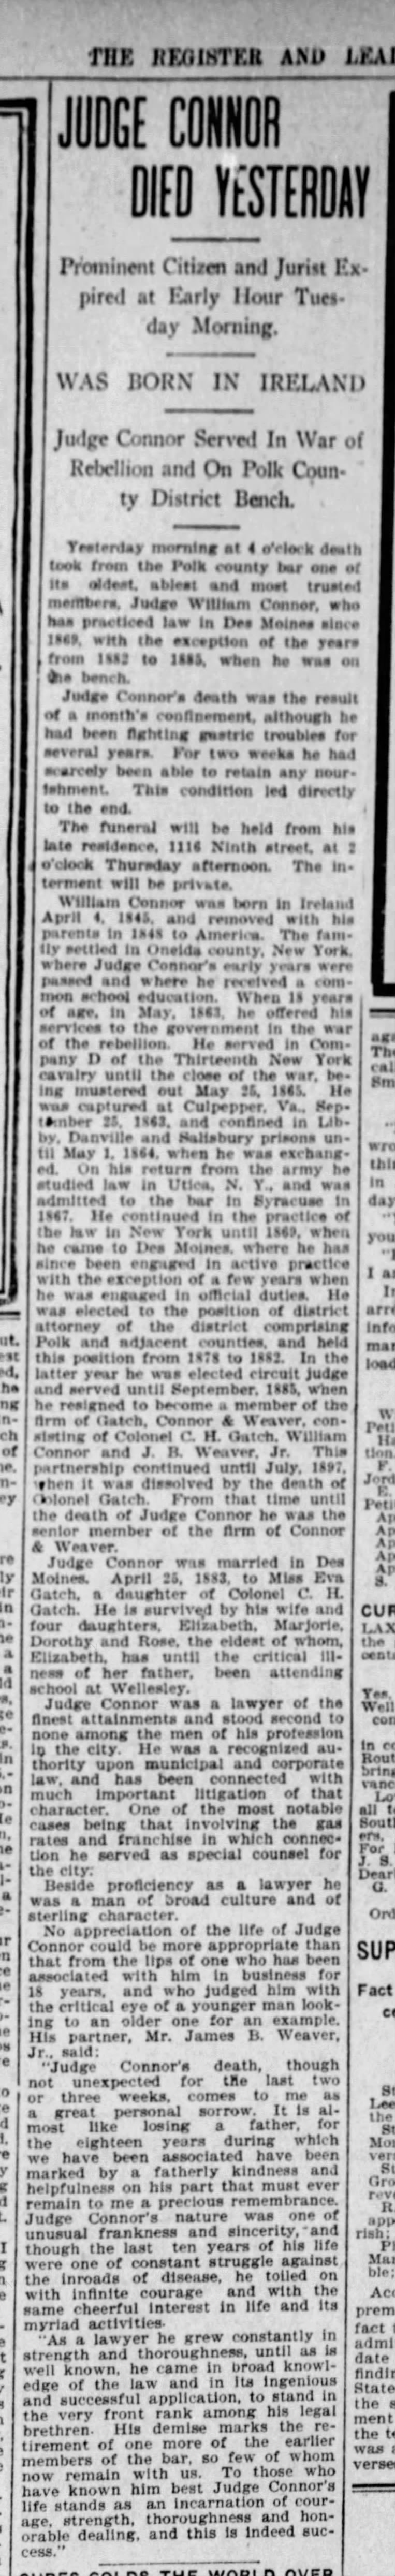 Judge William Connor (Rose Connor's father) obituary from Feb 9, 1904